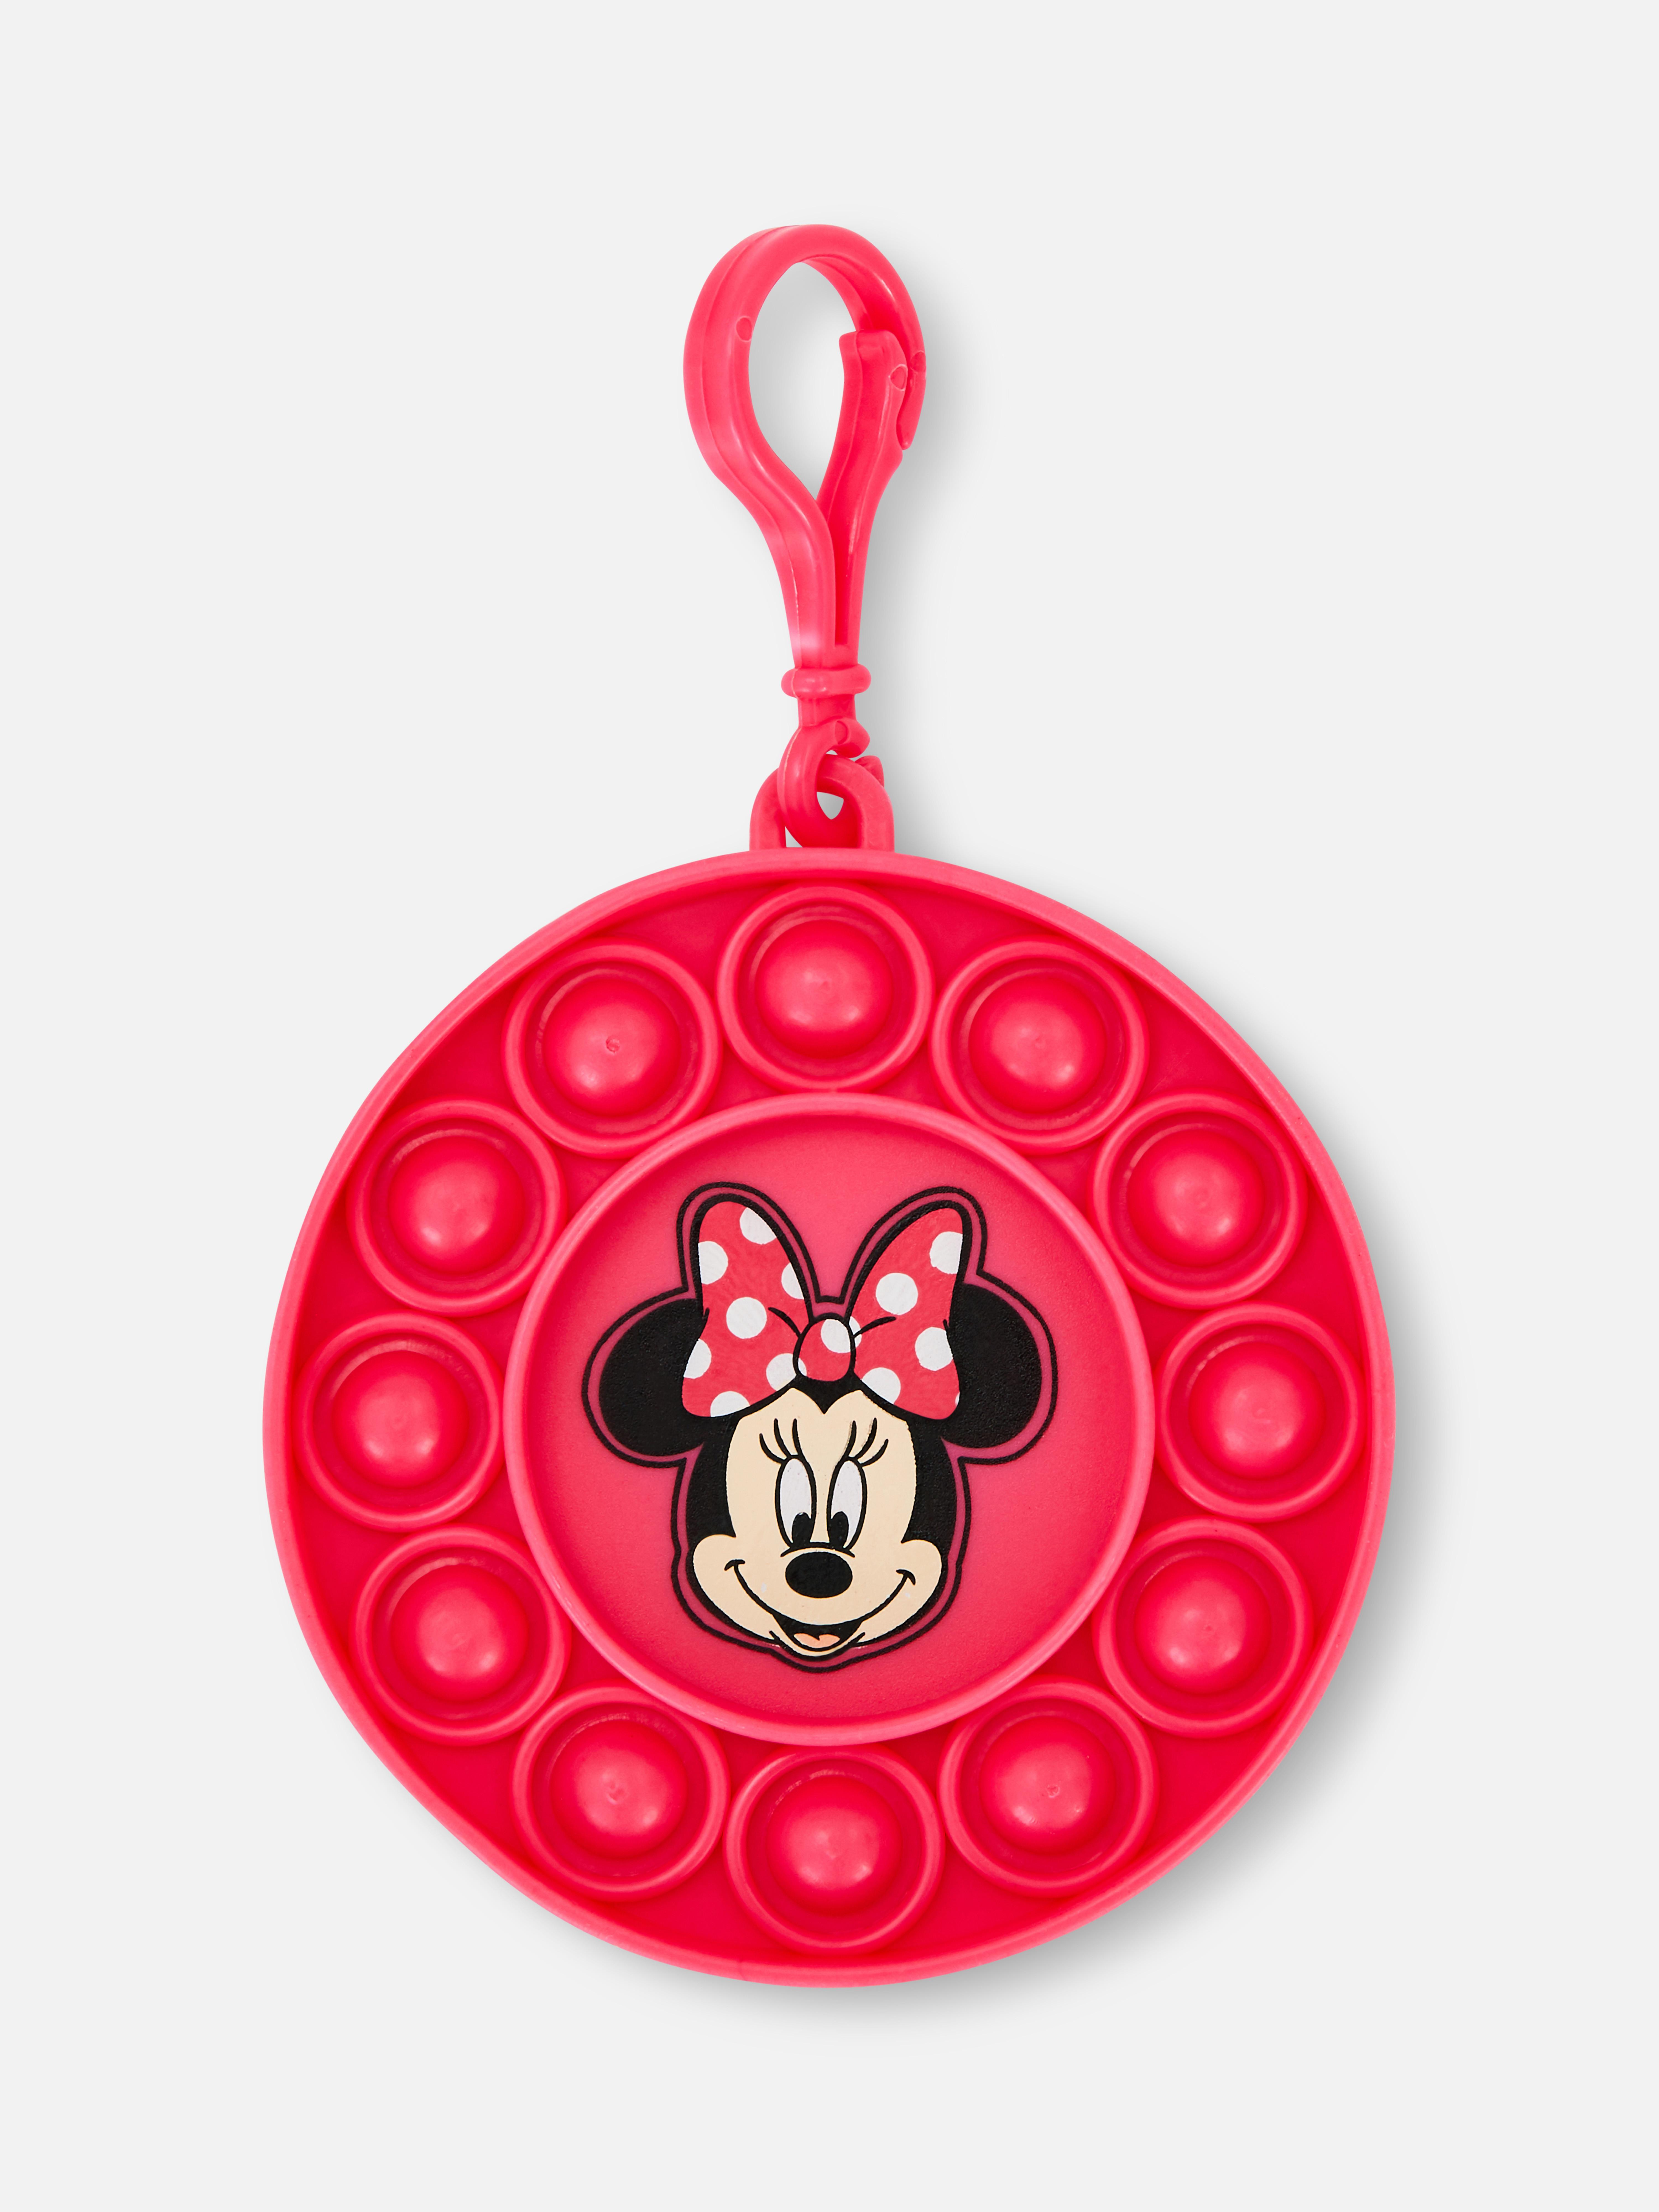 Disney's Minnie Mouse Popper Toy